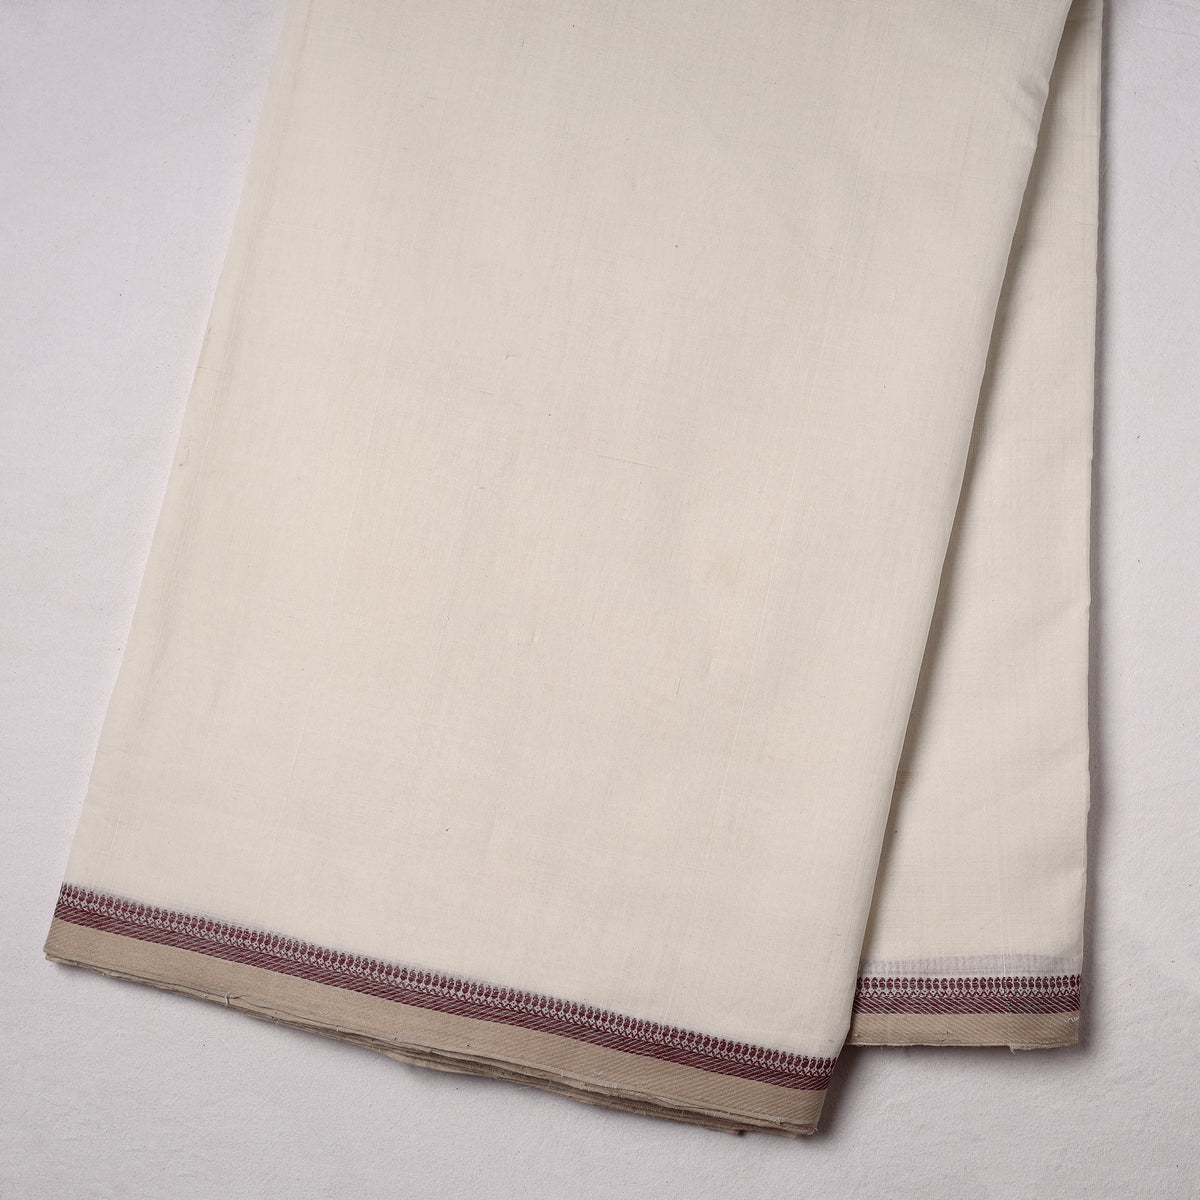 Original Mangalagiri Handloom Cotton Thread Border Fabric 02